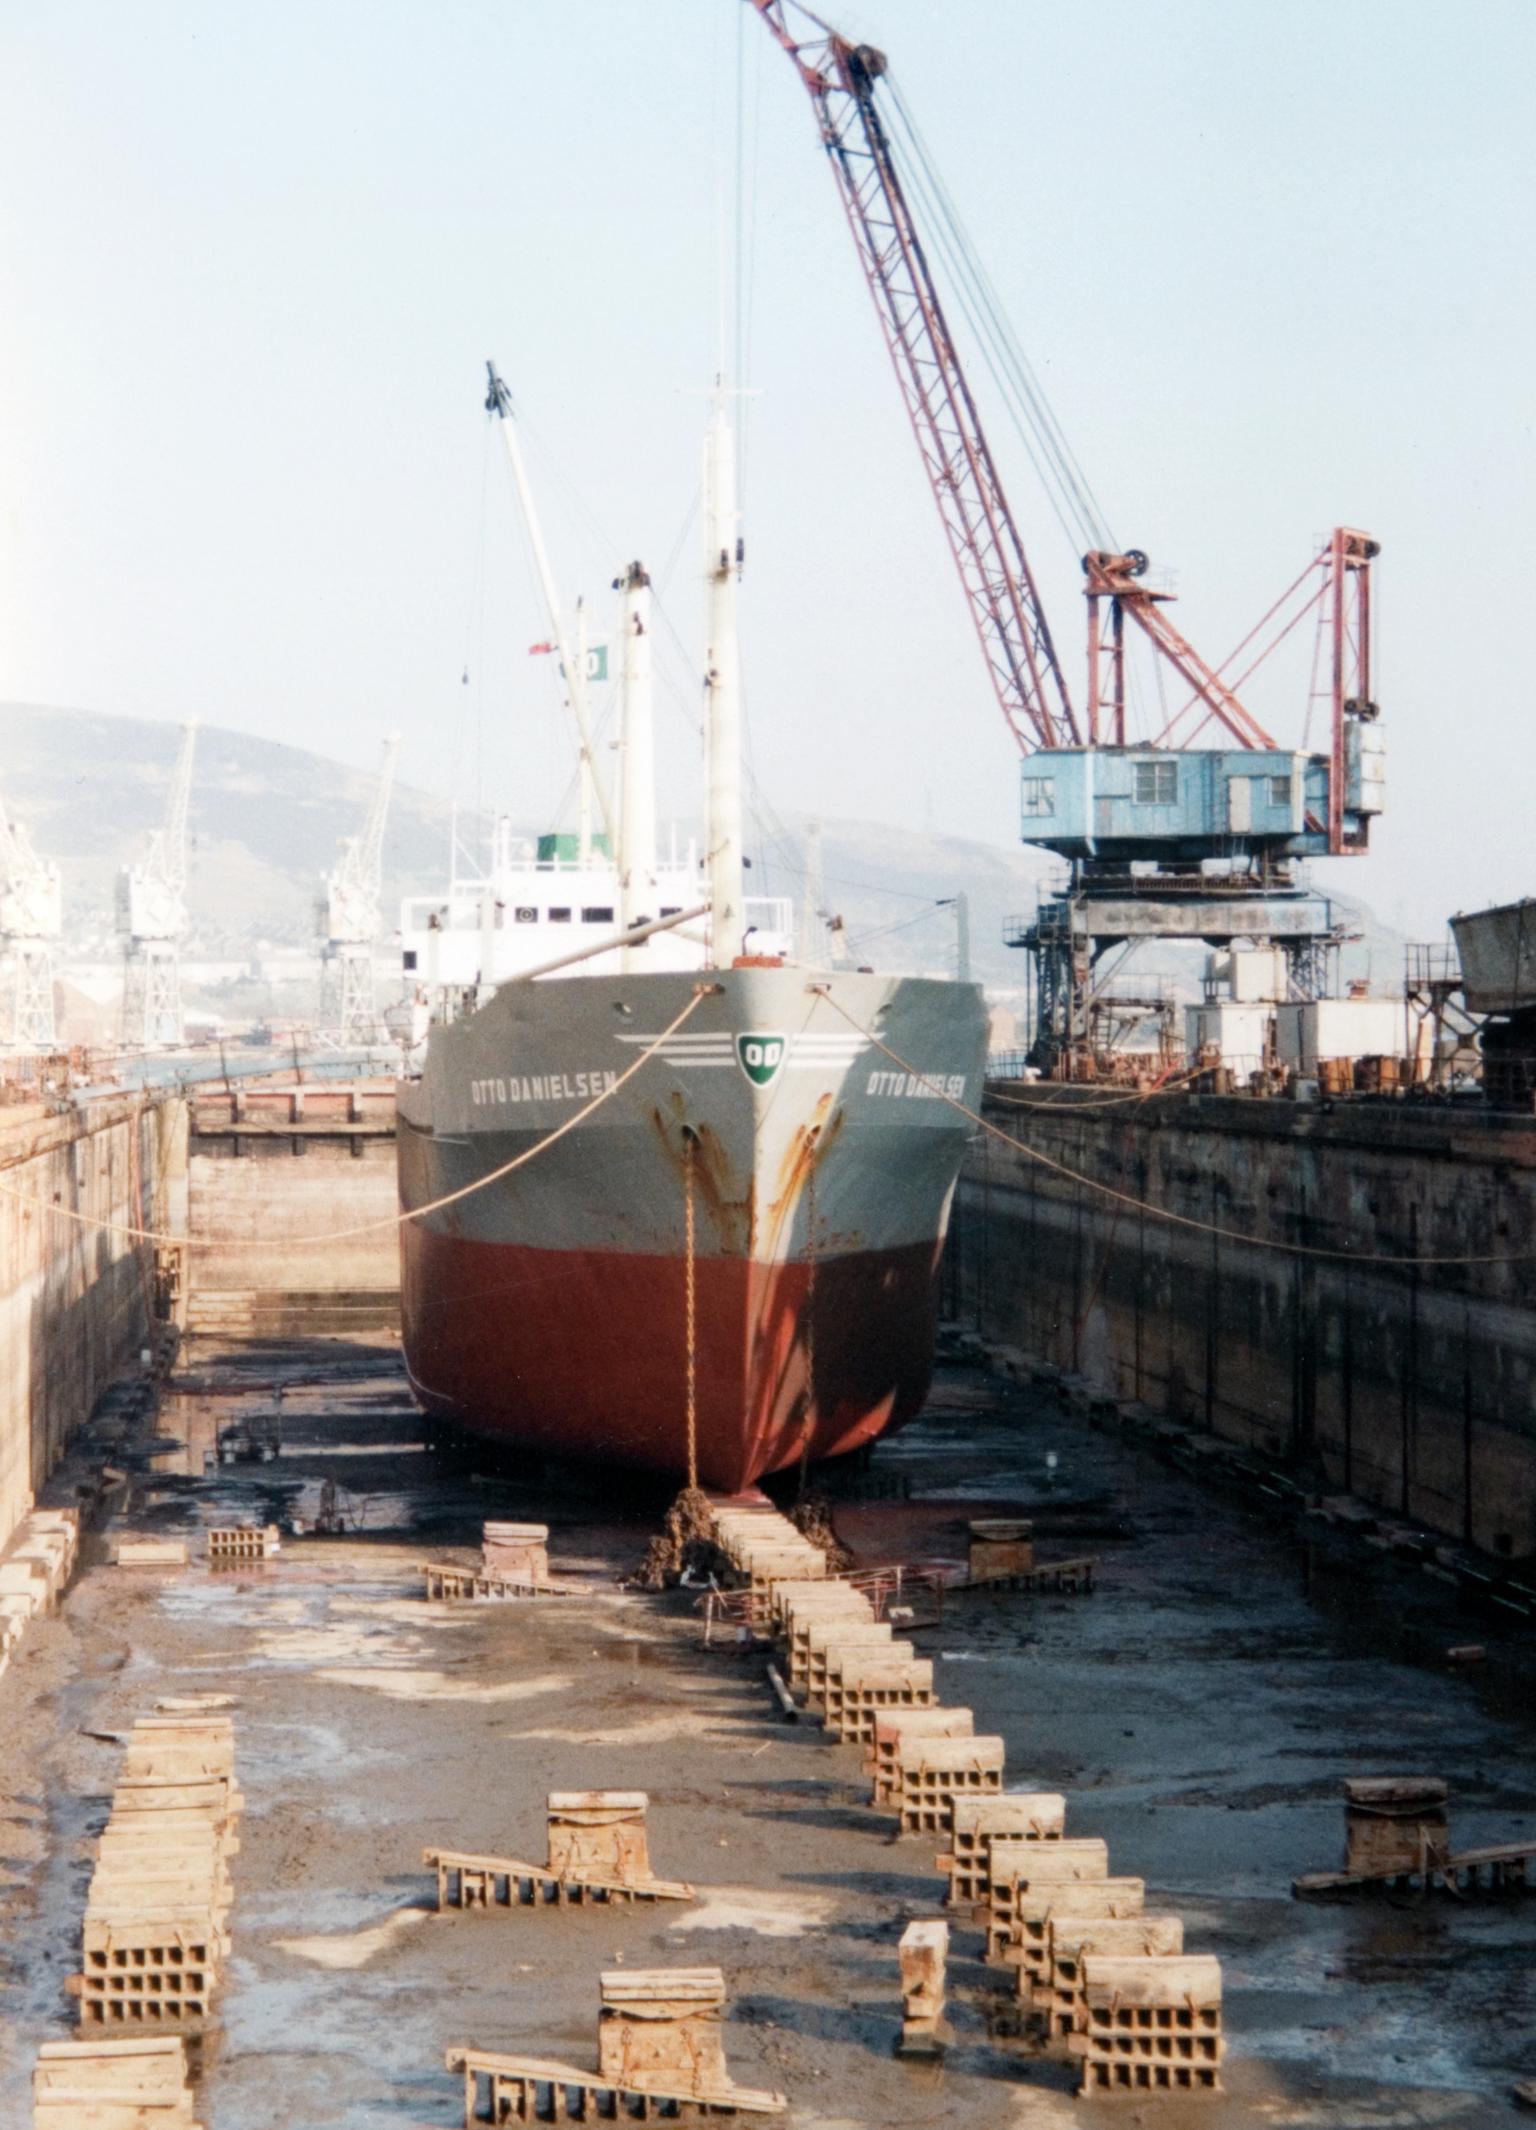 Swansea Dry Docks, photograph